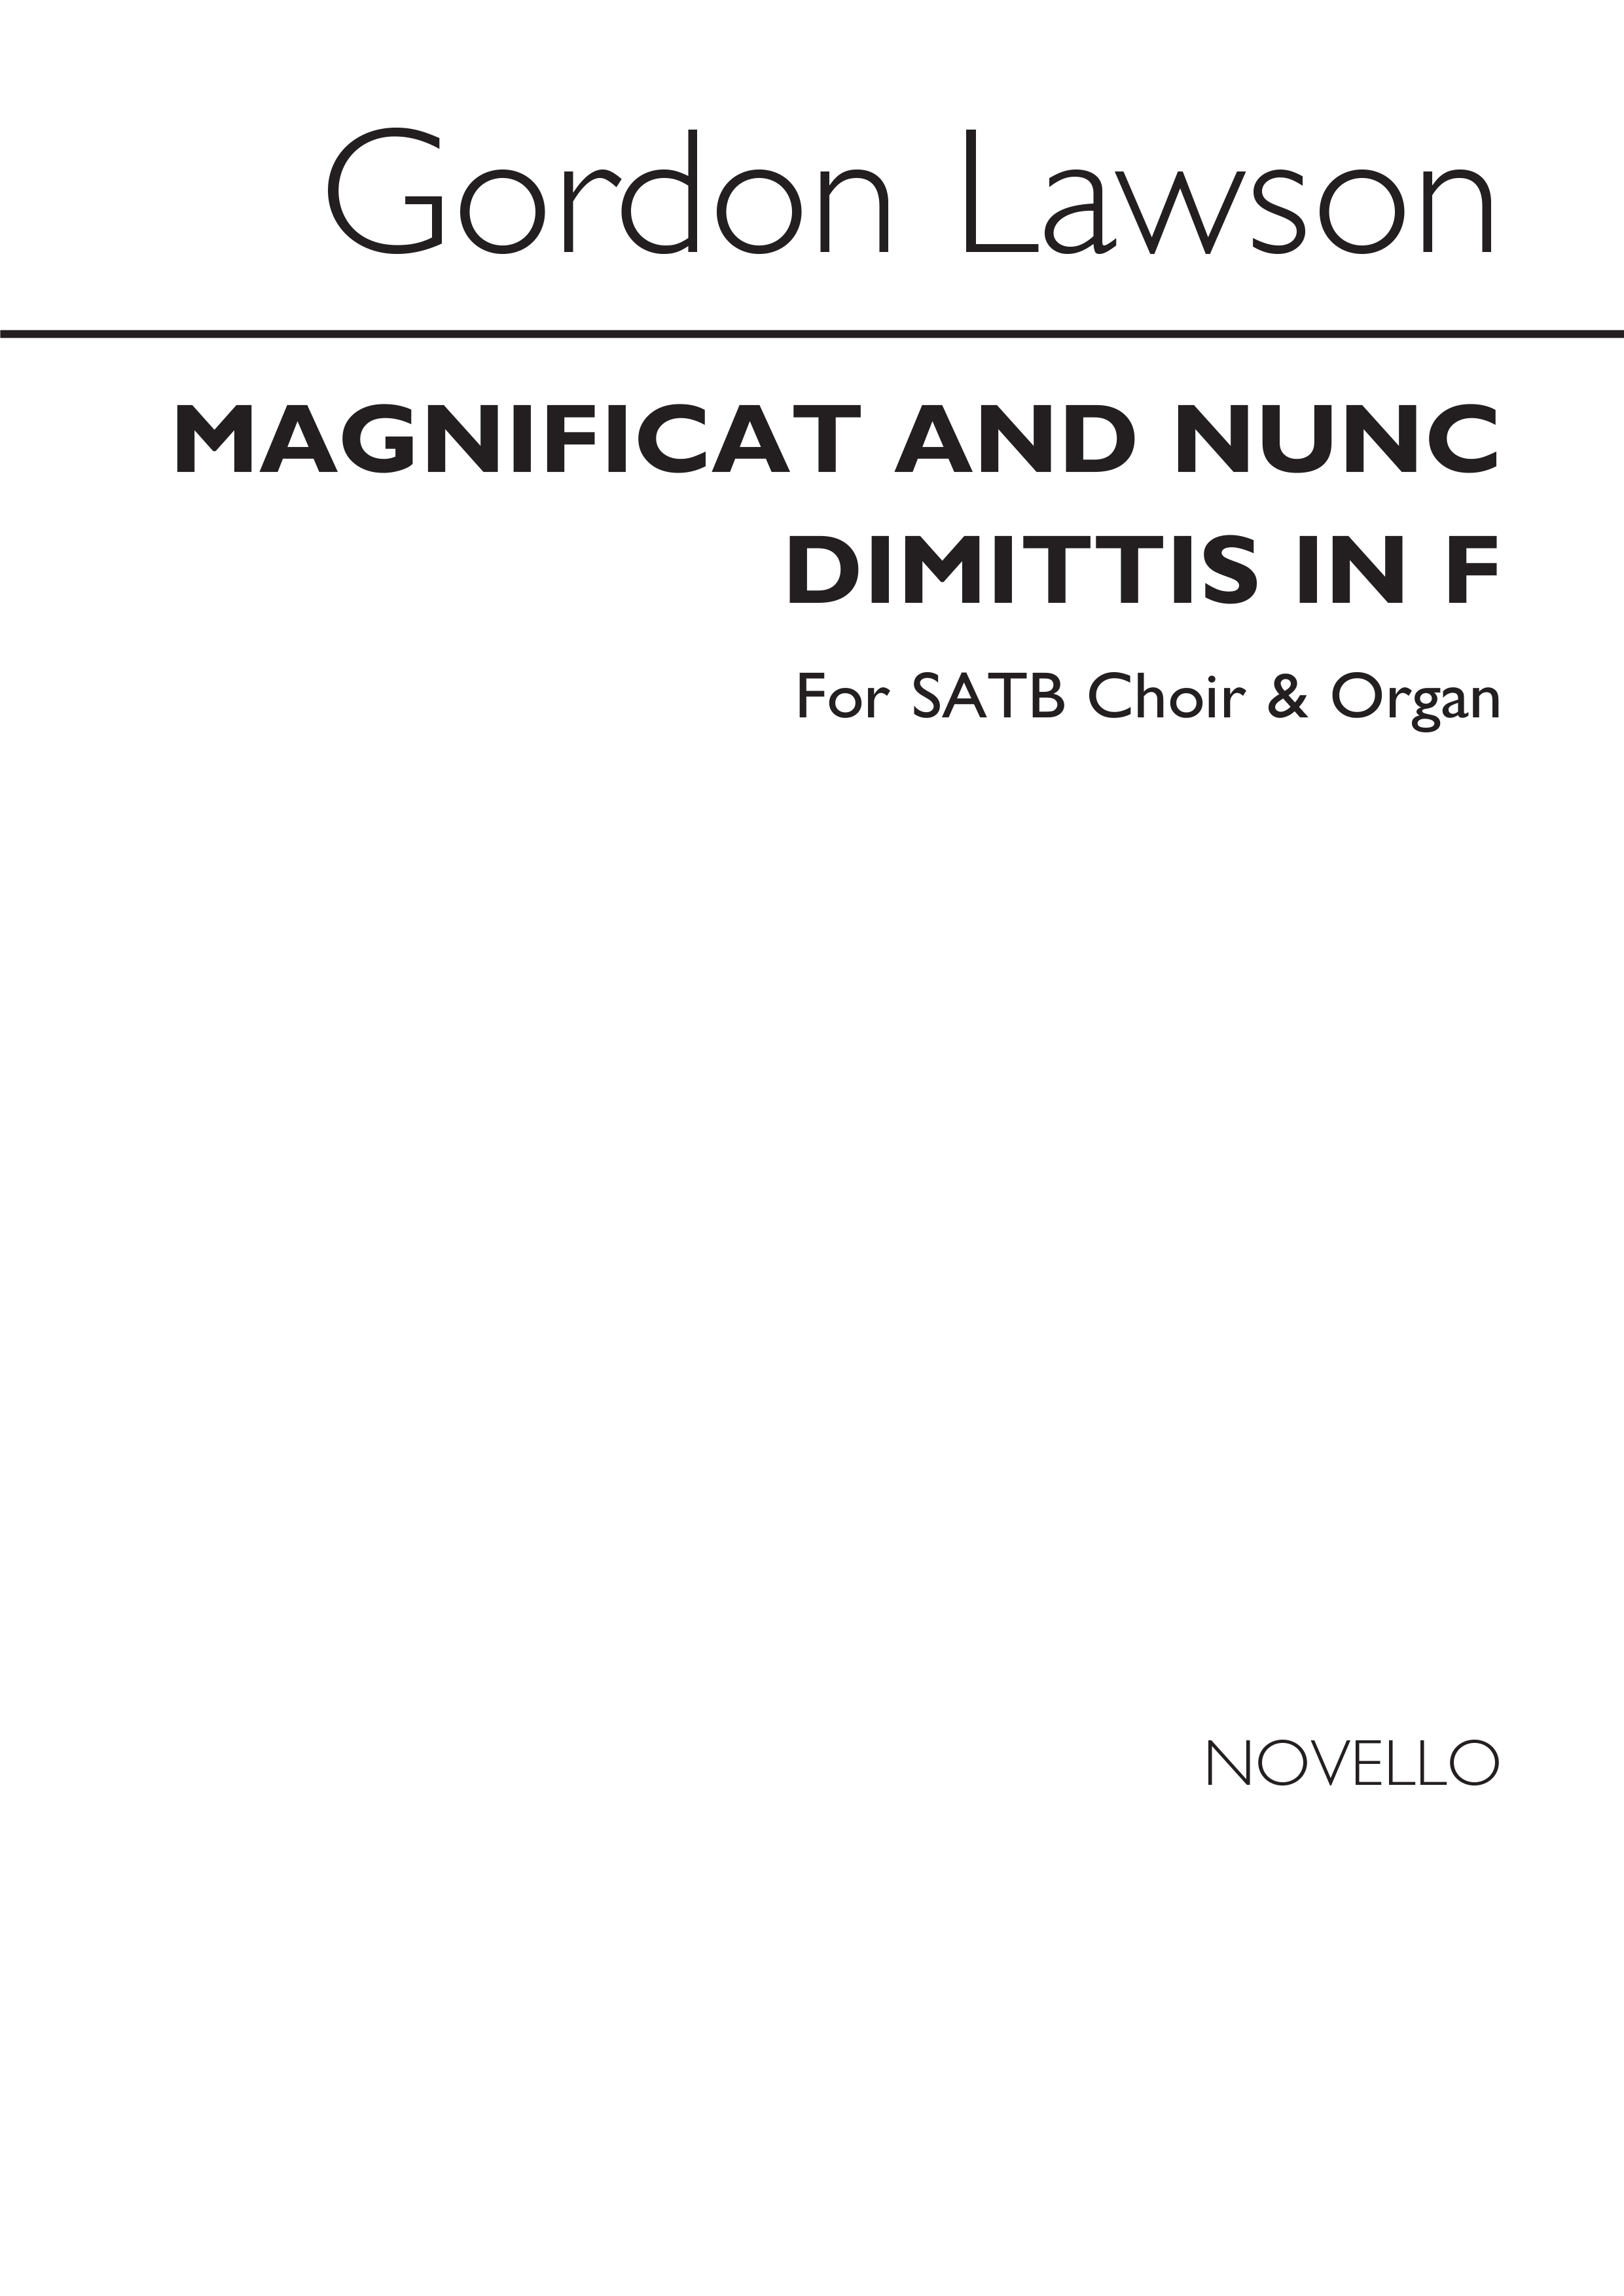 Gordon Lawson: Magnificat And Nunc Dimittis In F Satb/Organ